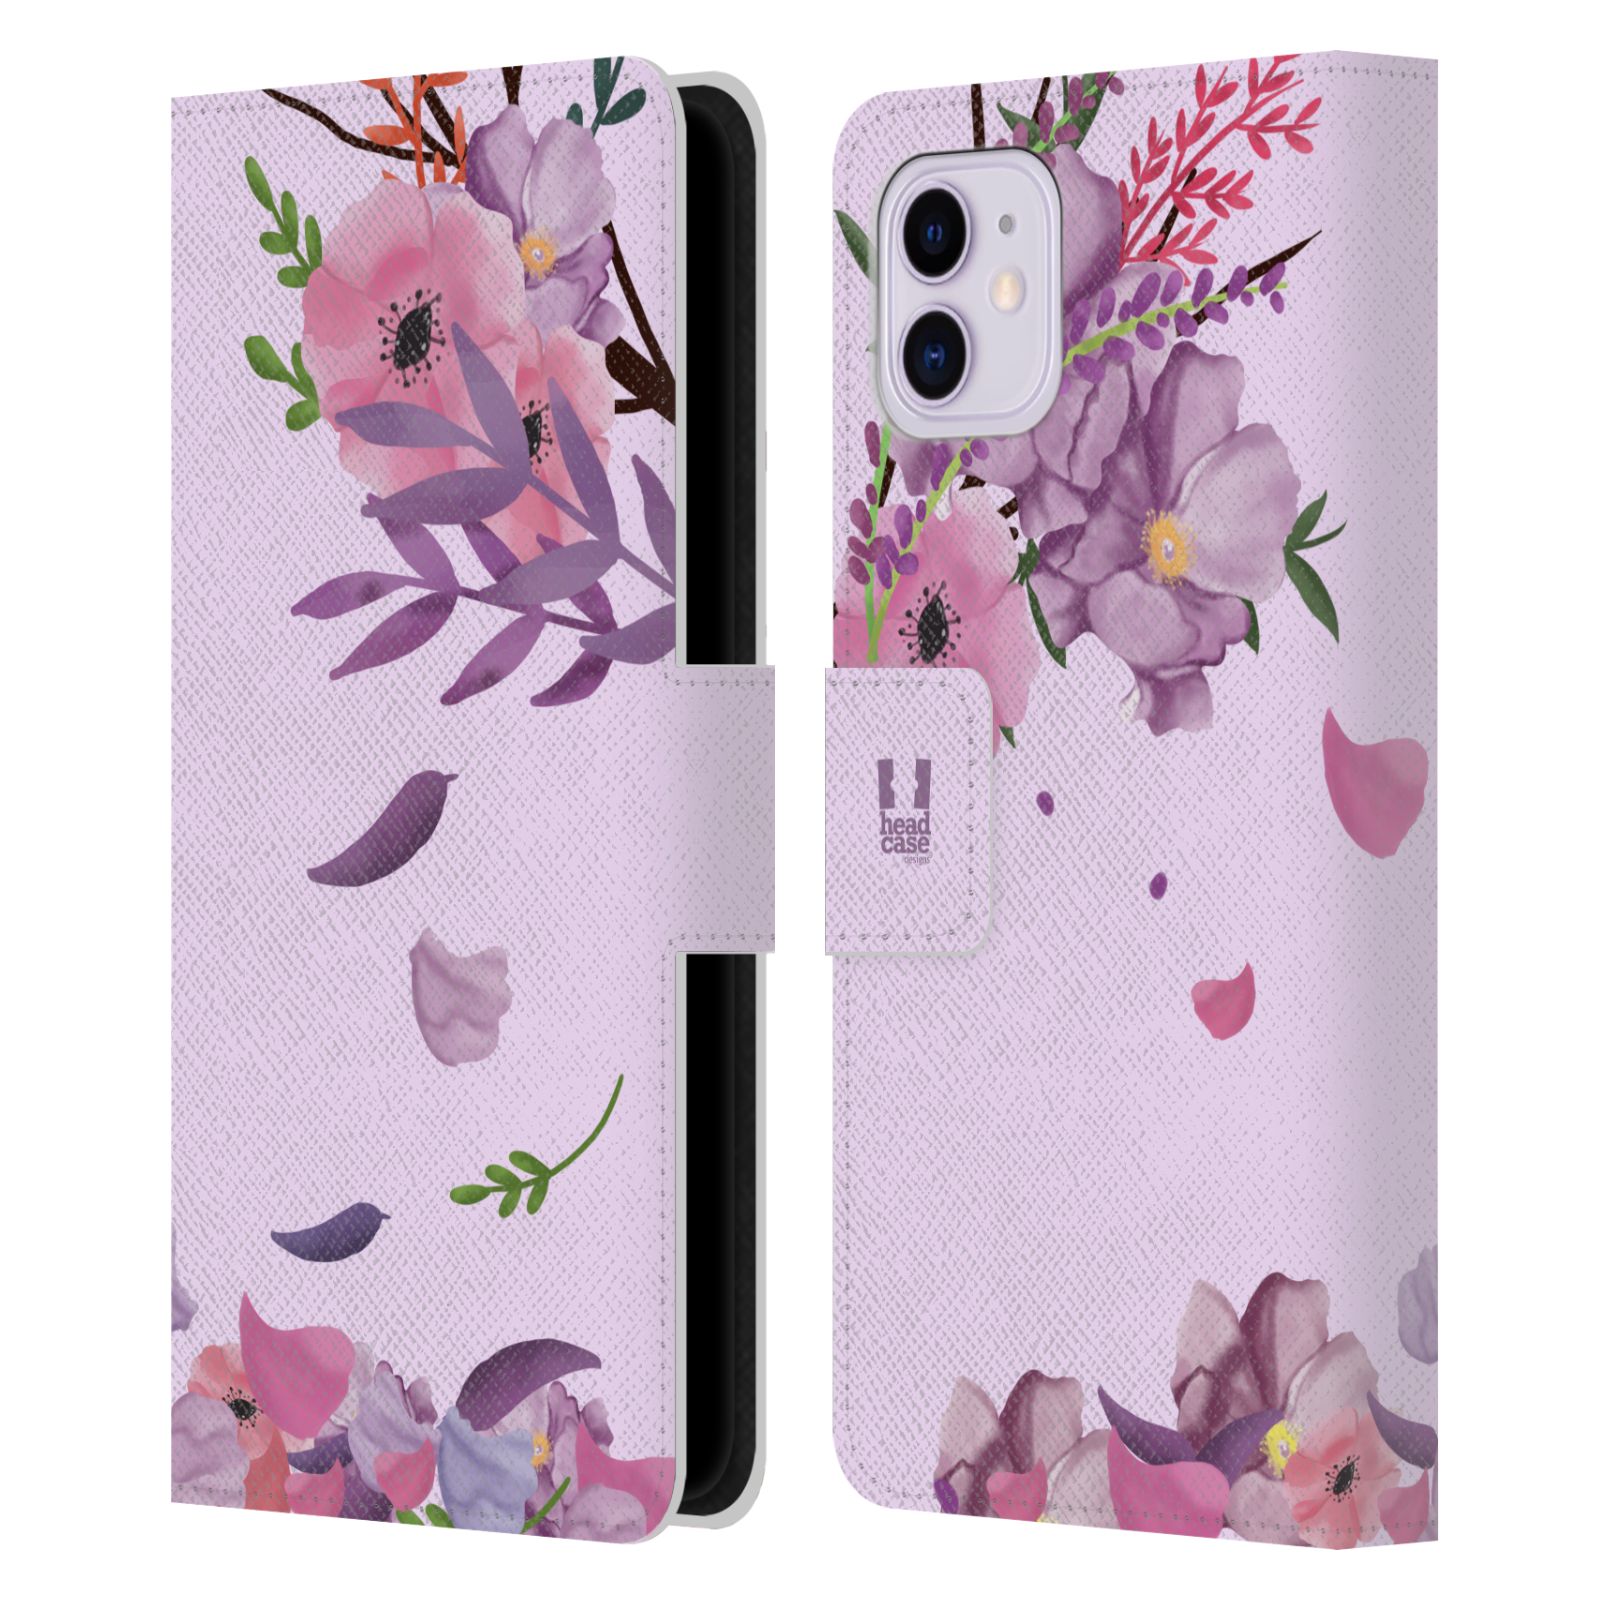 Pouzdro na mobil Apple Iphone 11 - HEAD CASE - Rozkvetlé růže a listy růžová